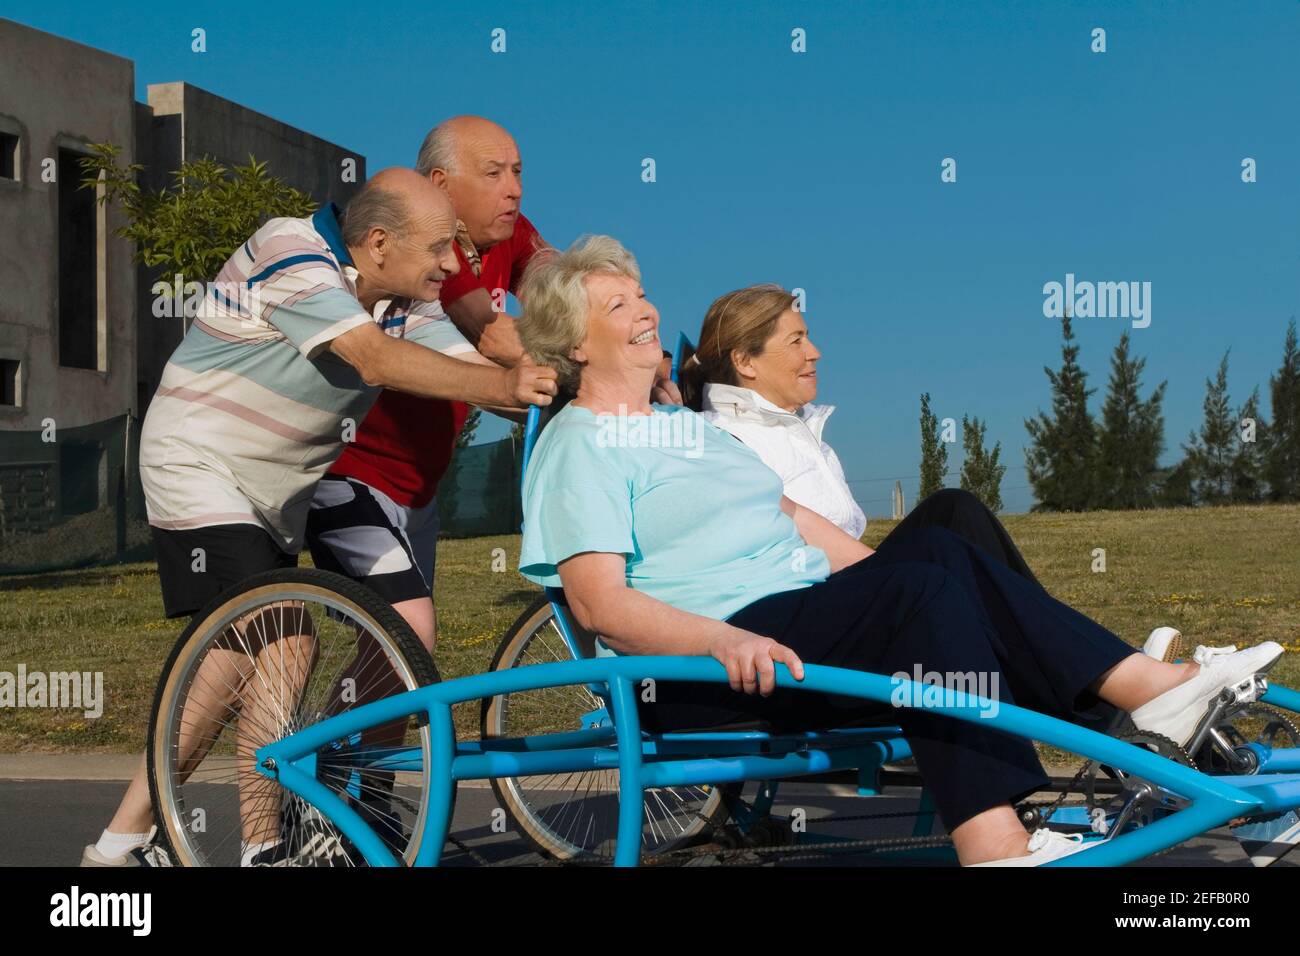 Two senior women sitting on a quadracycle and two senior men pushing it Stock Photo